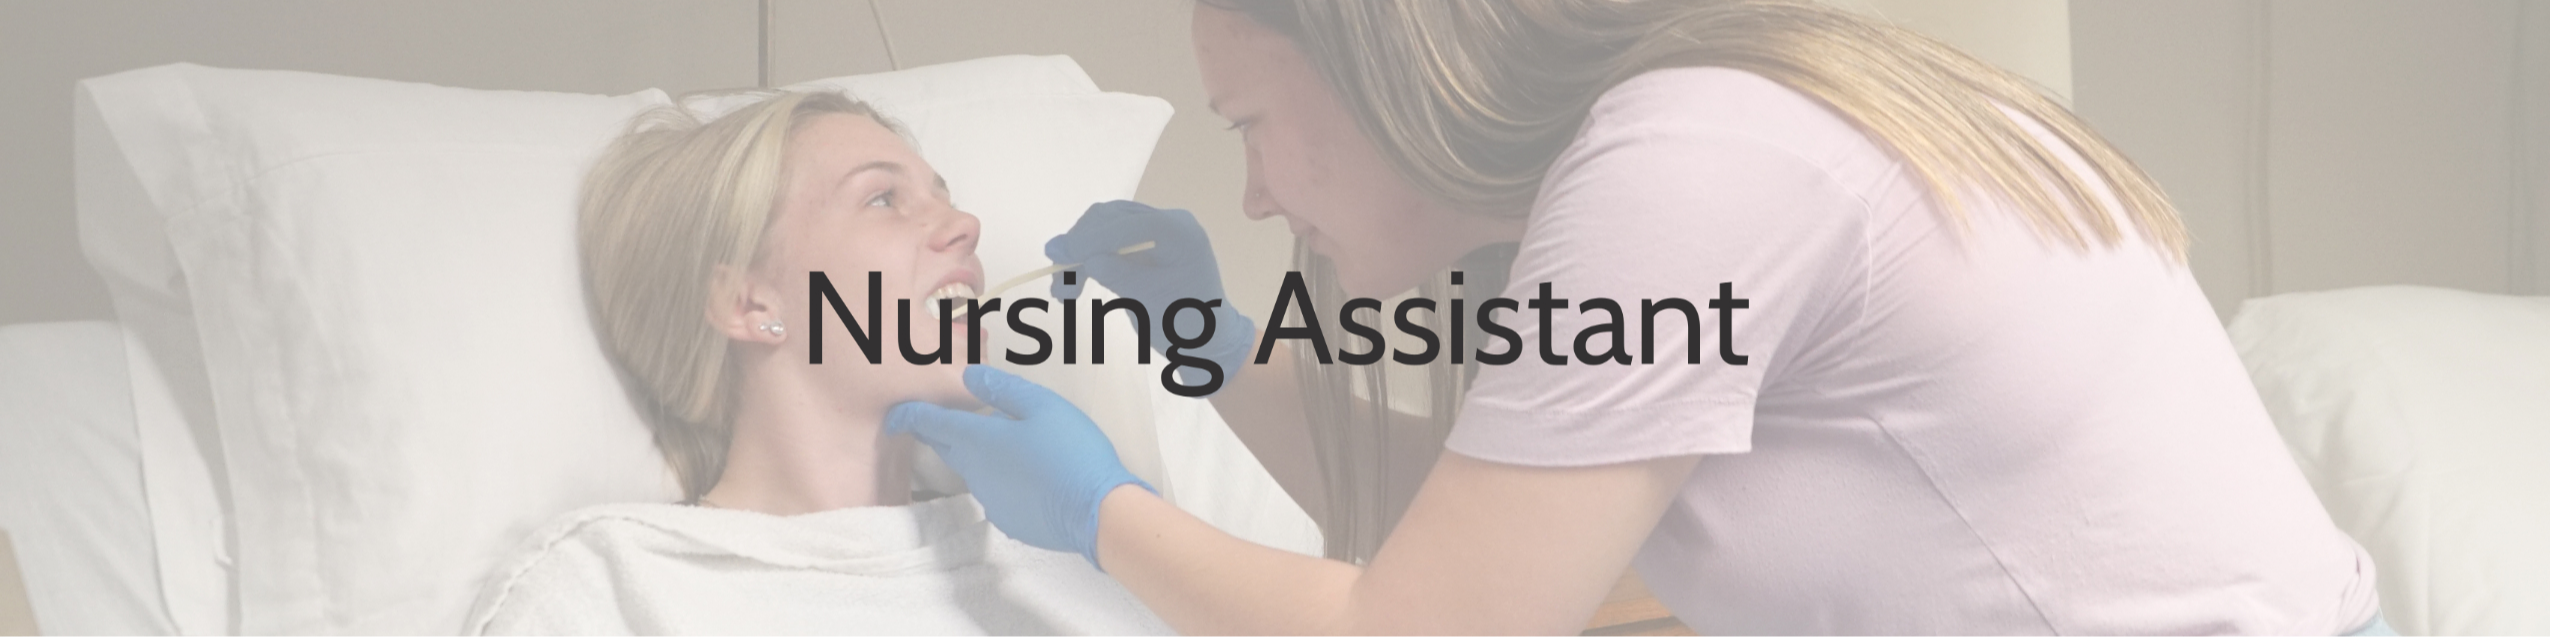 Nursing Assistant header